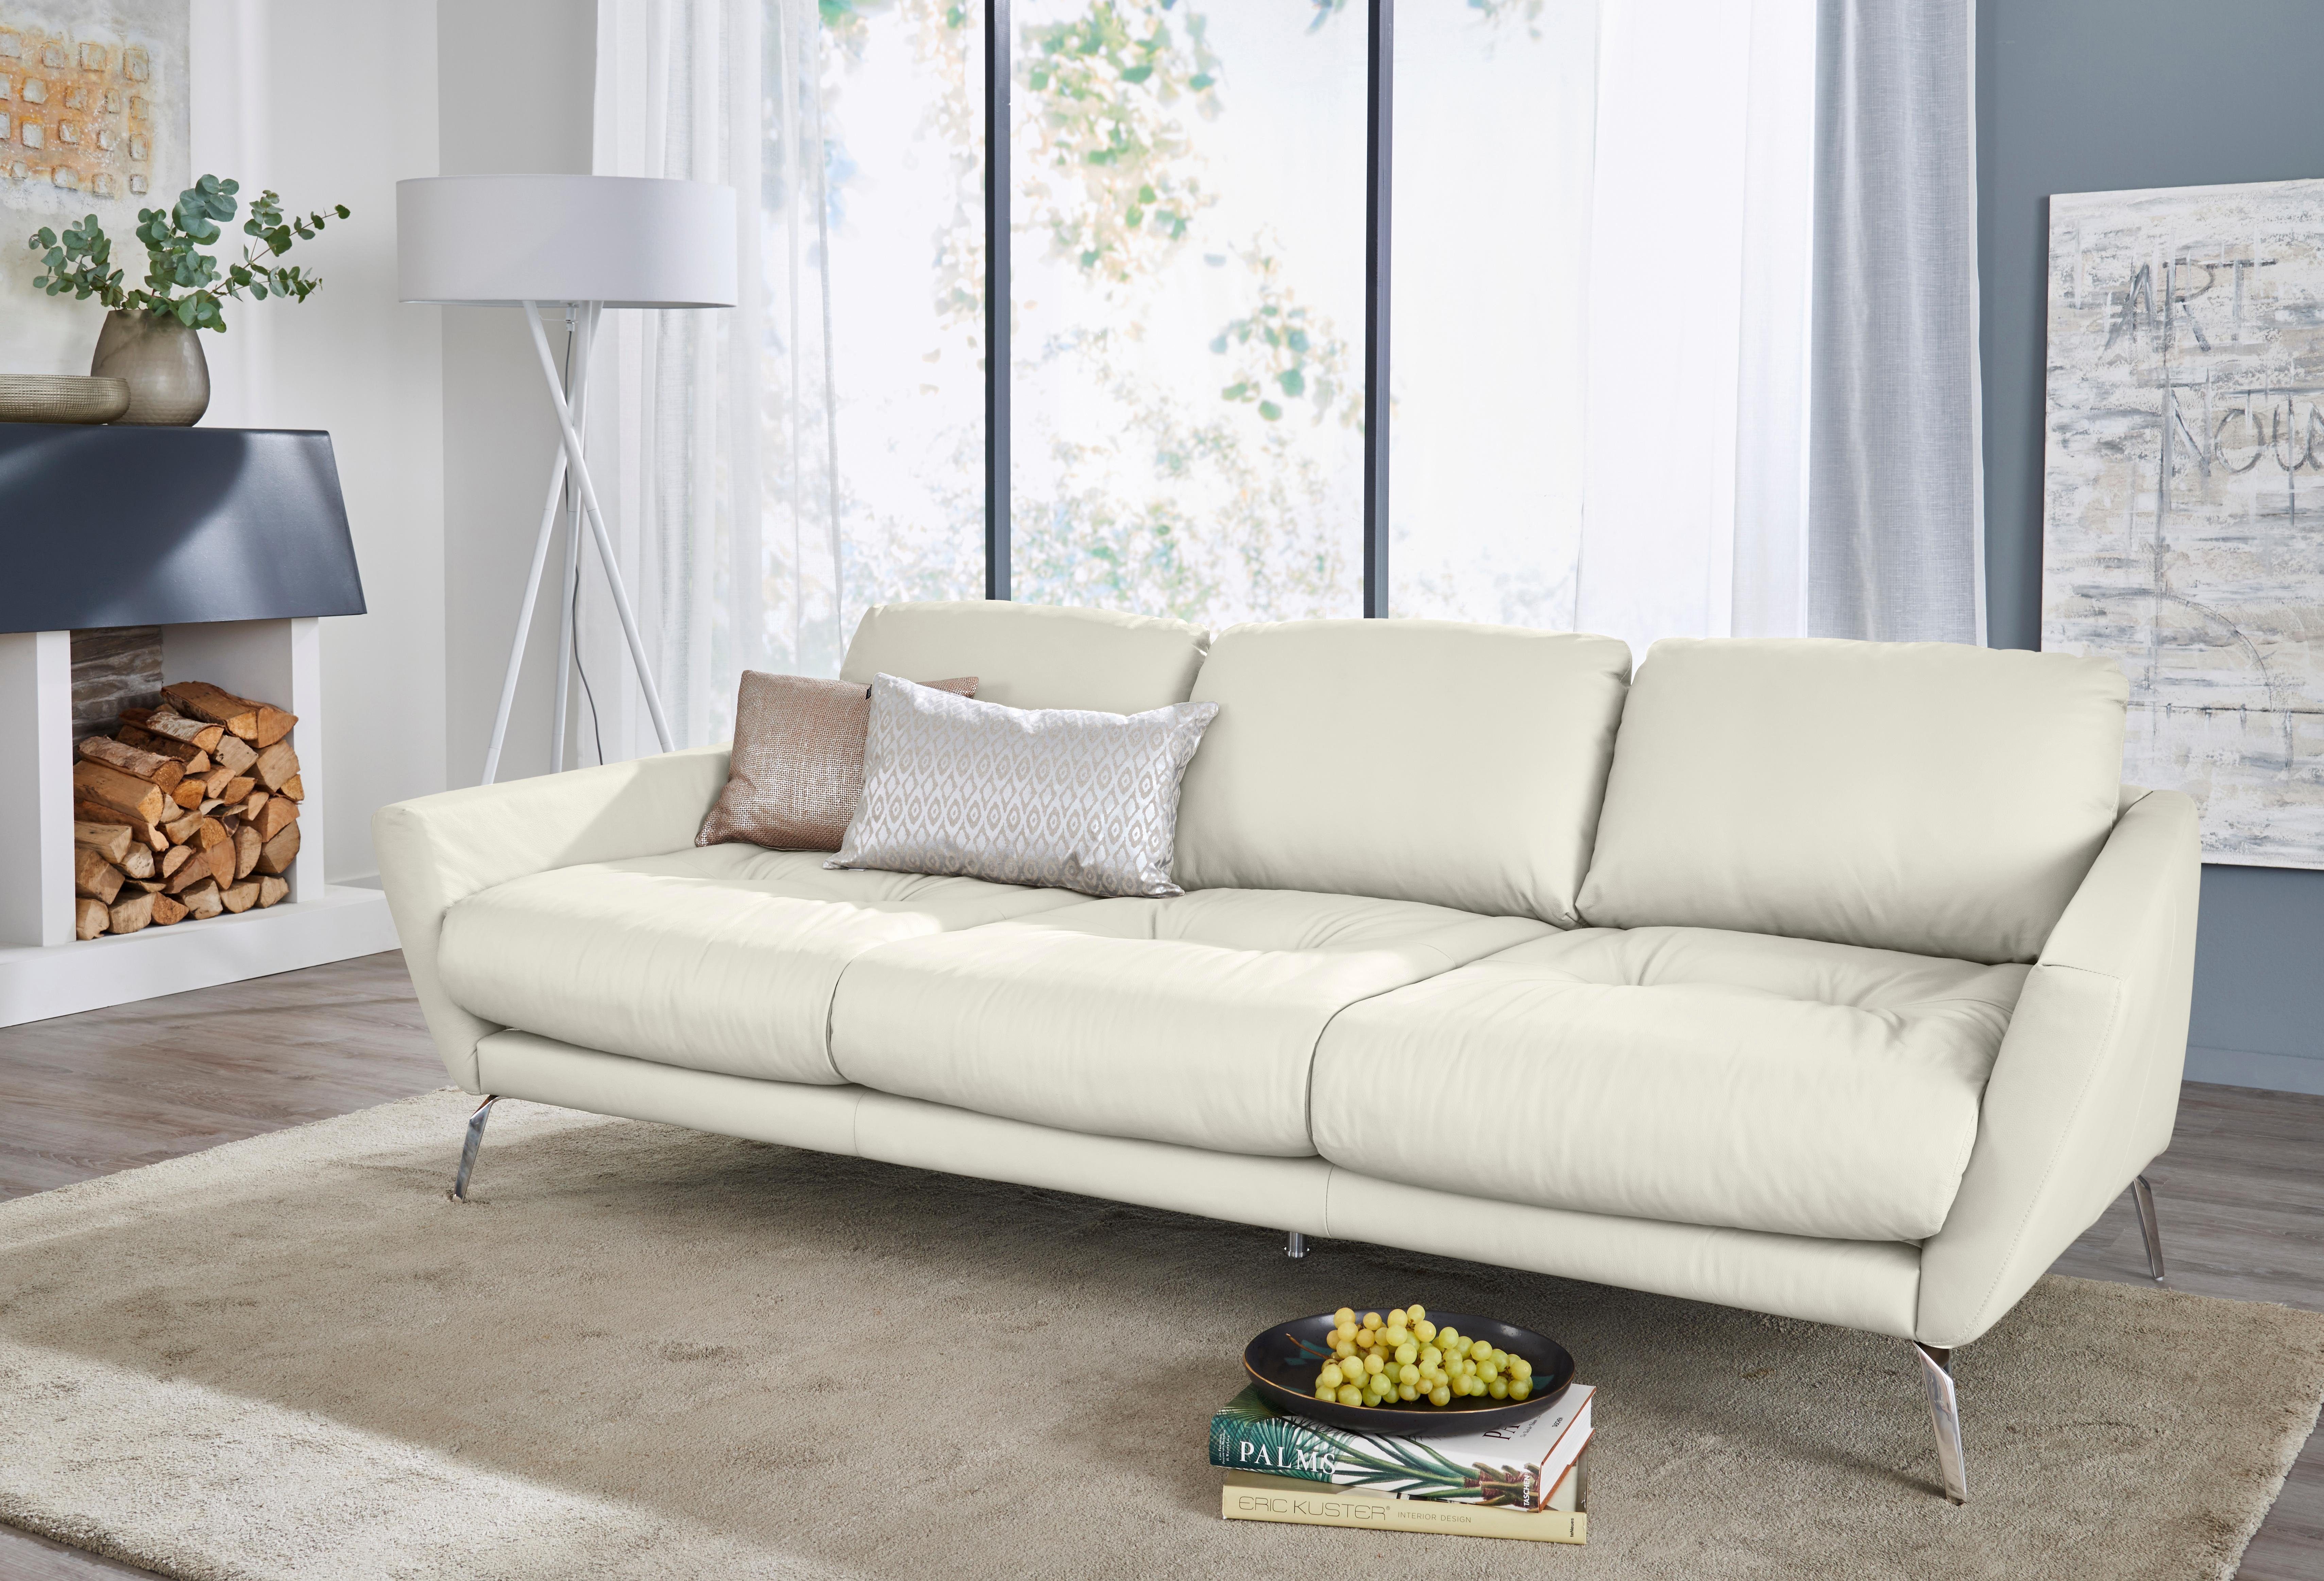 Chrom Sitz, Heftung Füße im mit Big-Sofa softy, W.SCHILLIG glänzend dekorativer